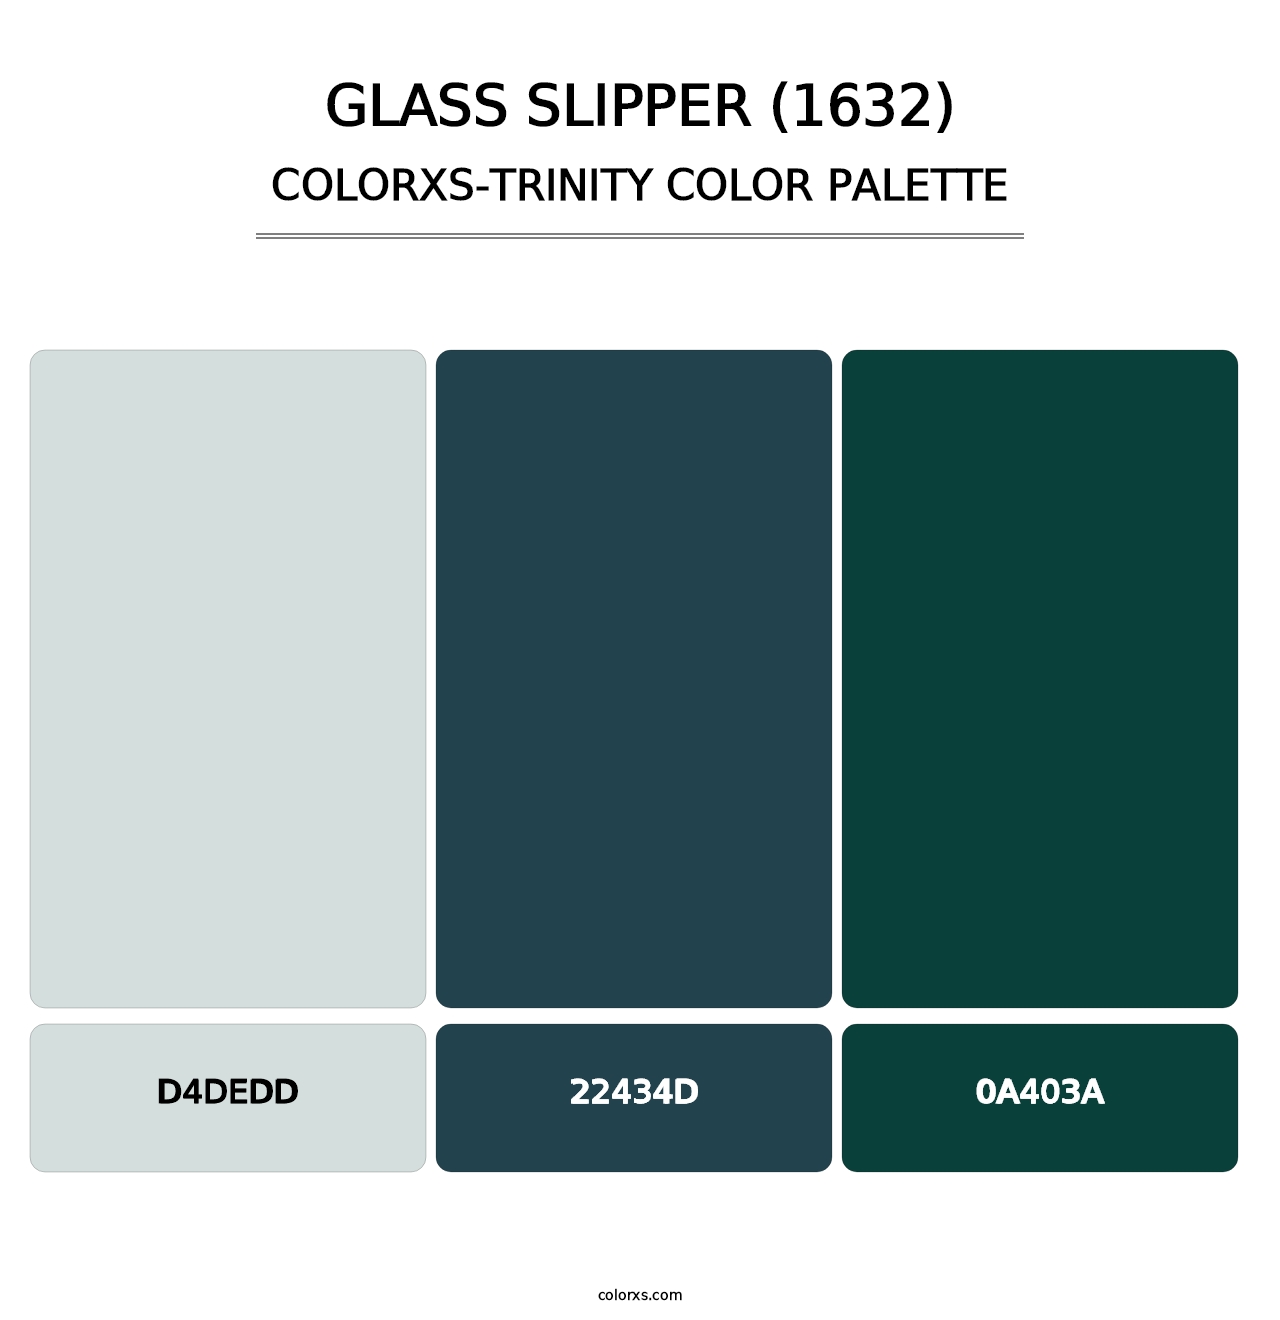 Glass Slipper (1632) - Colorxs Trinity Palette